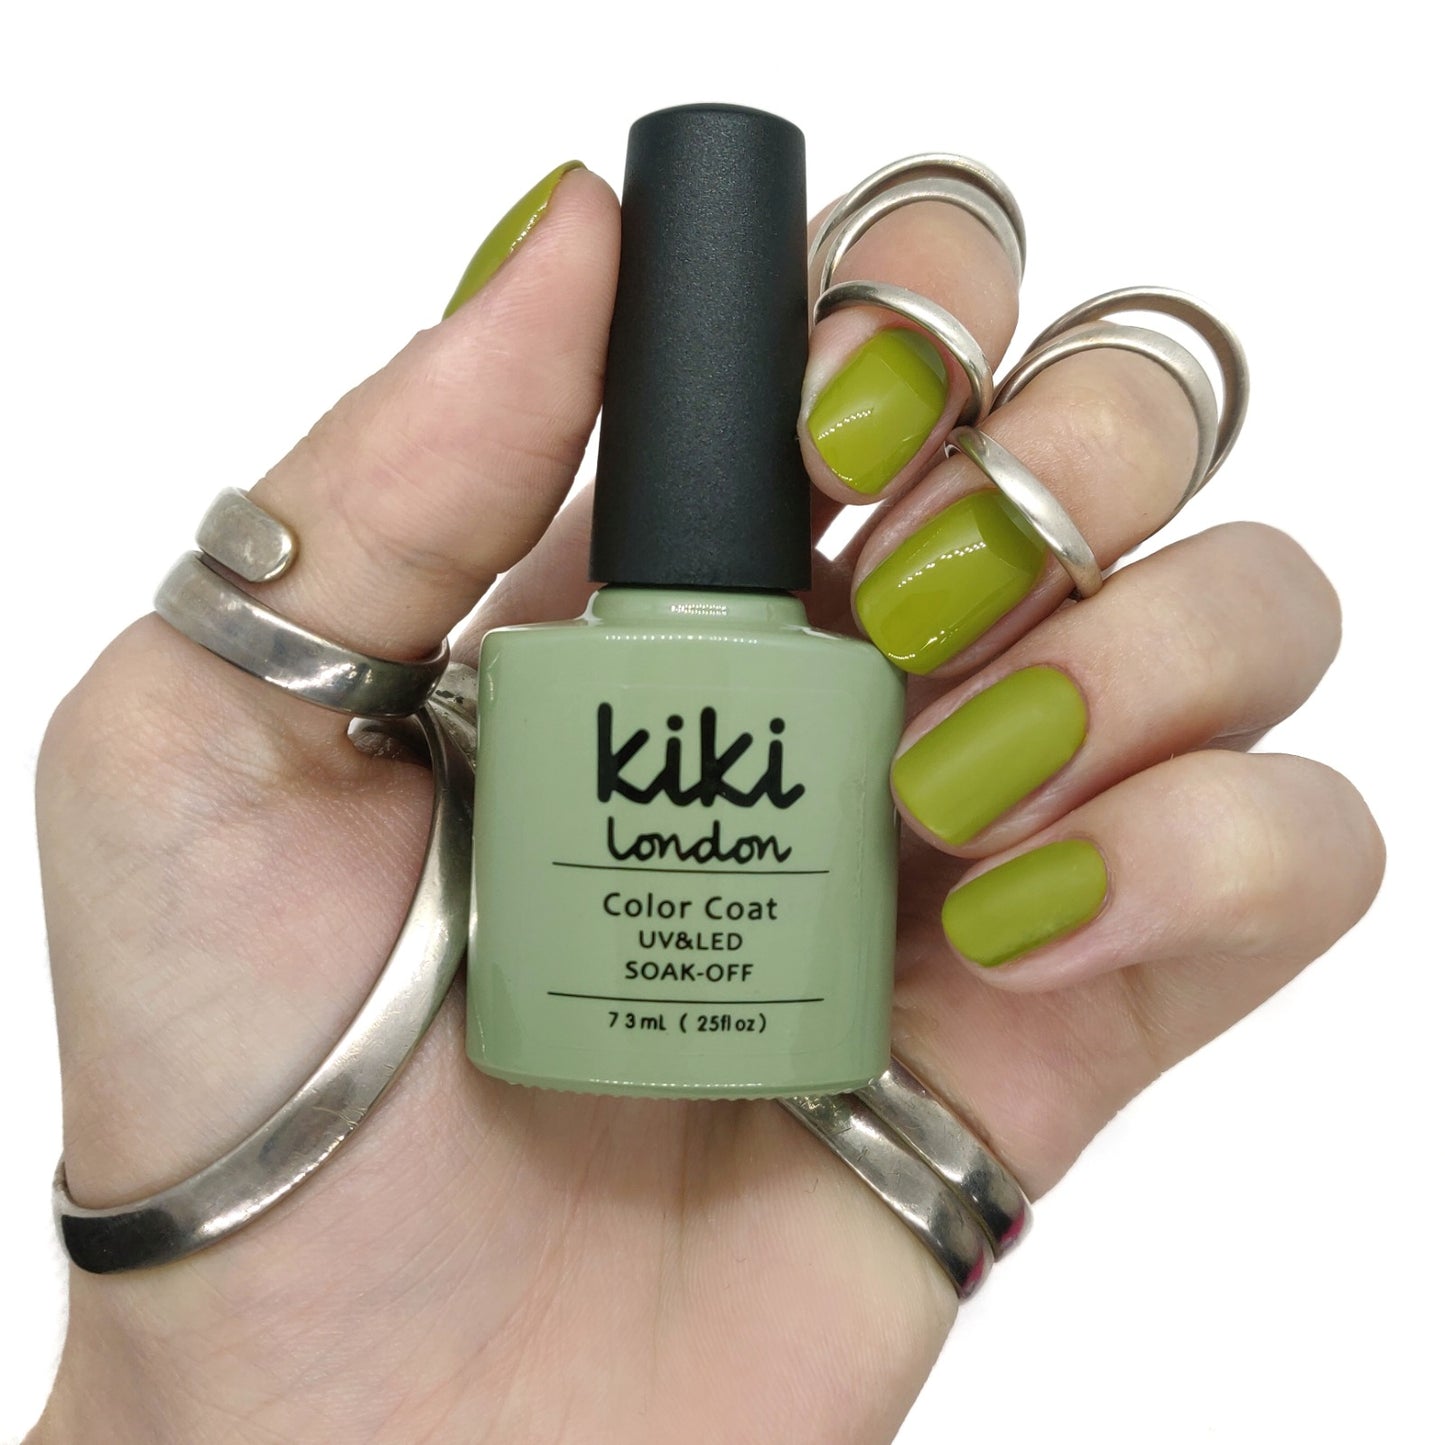 Olive You 15ml - Kiki London Benelux